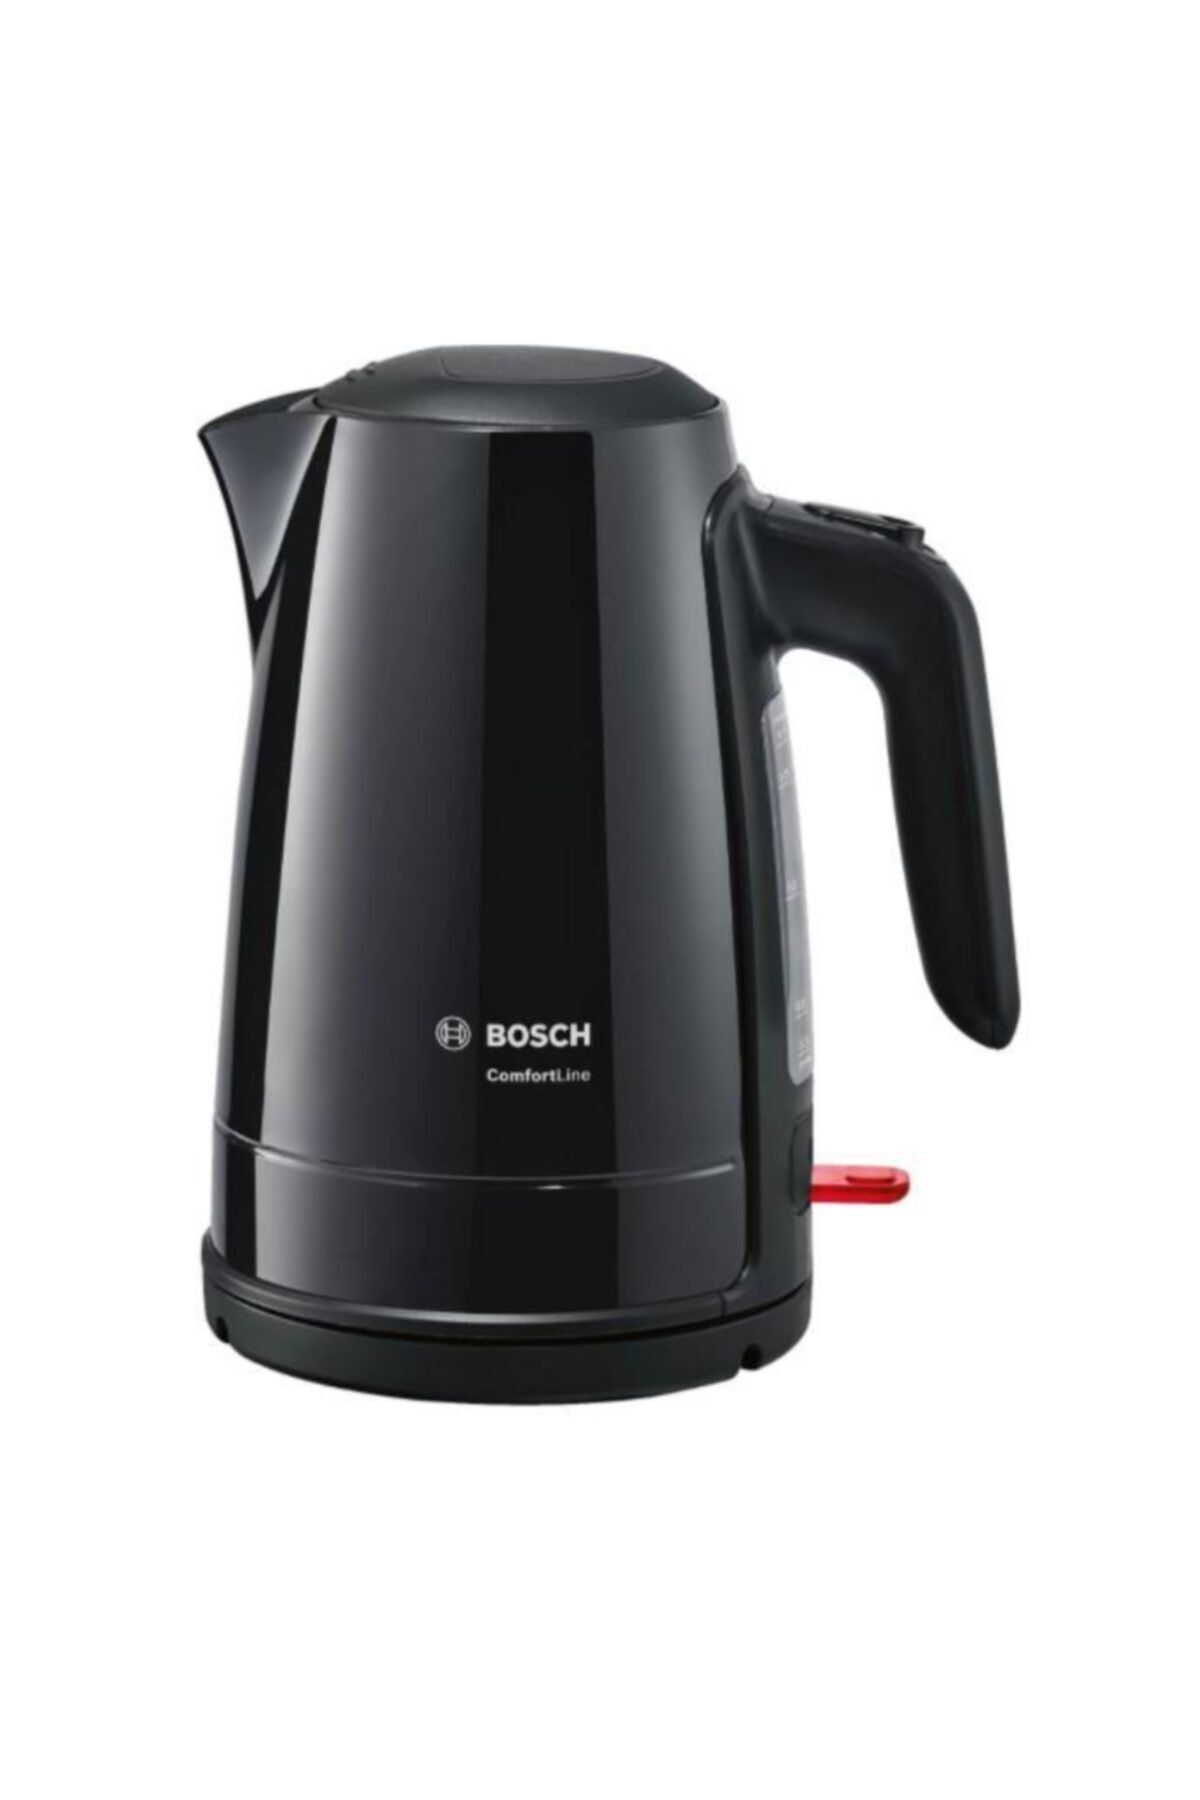 Bosch Twk6a013 Su Isıtıcı